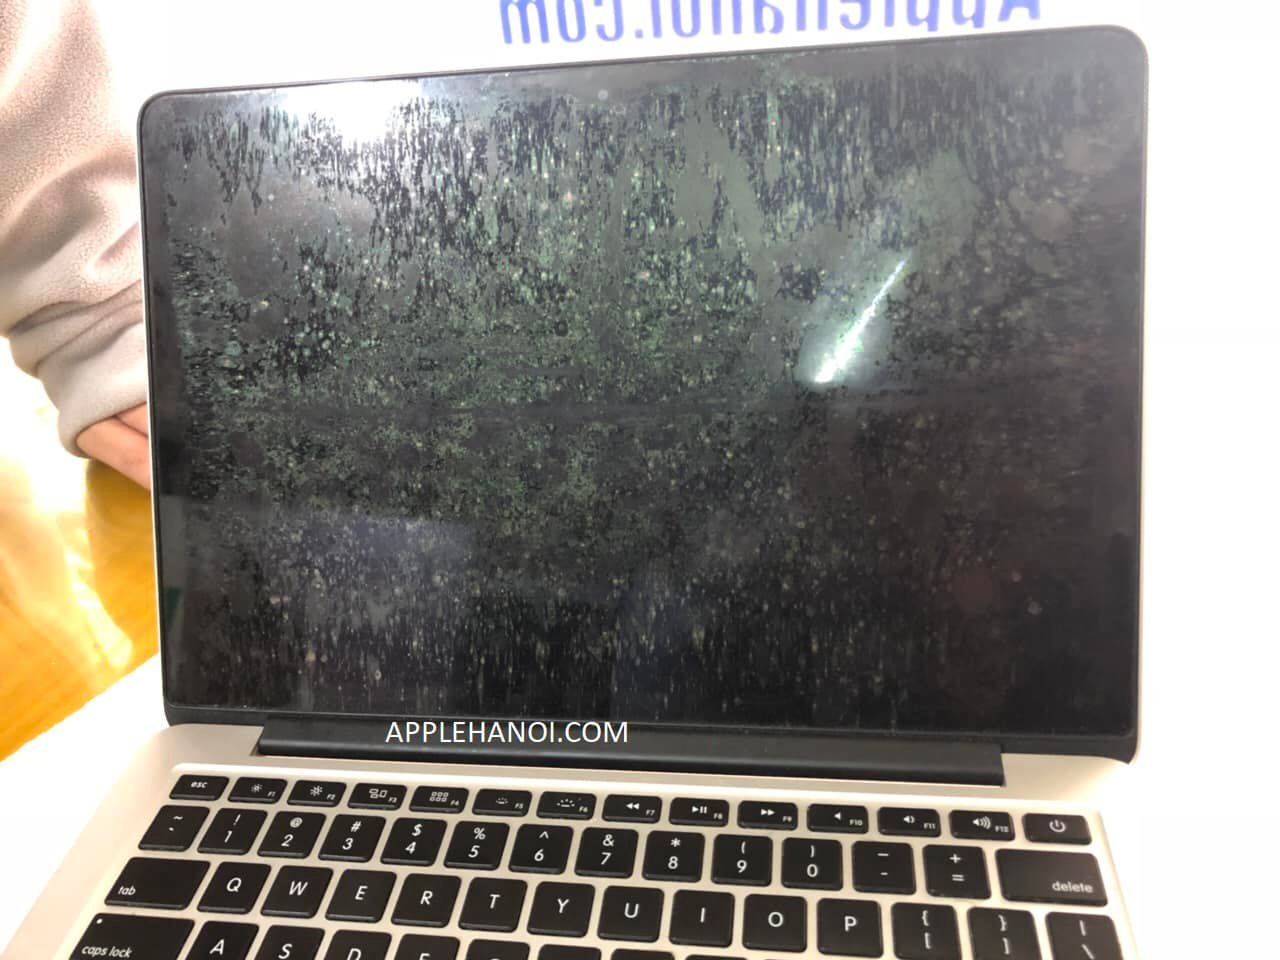 macbook pro retina screen coating damage